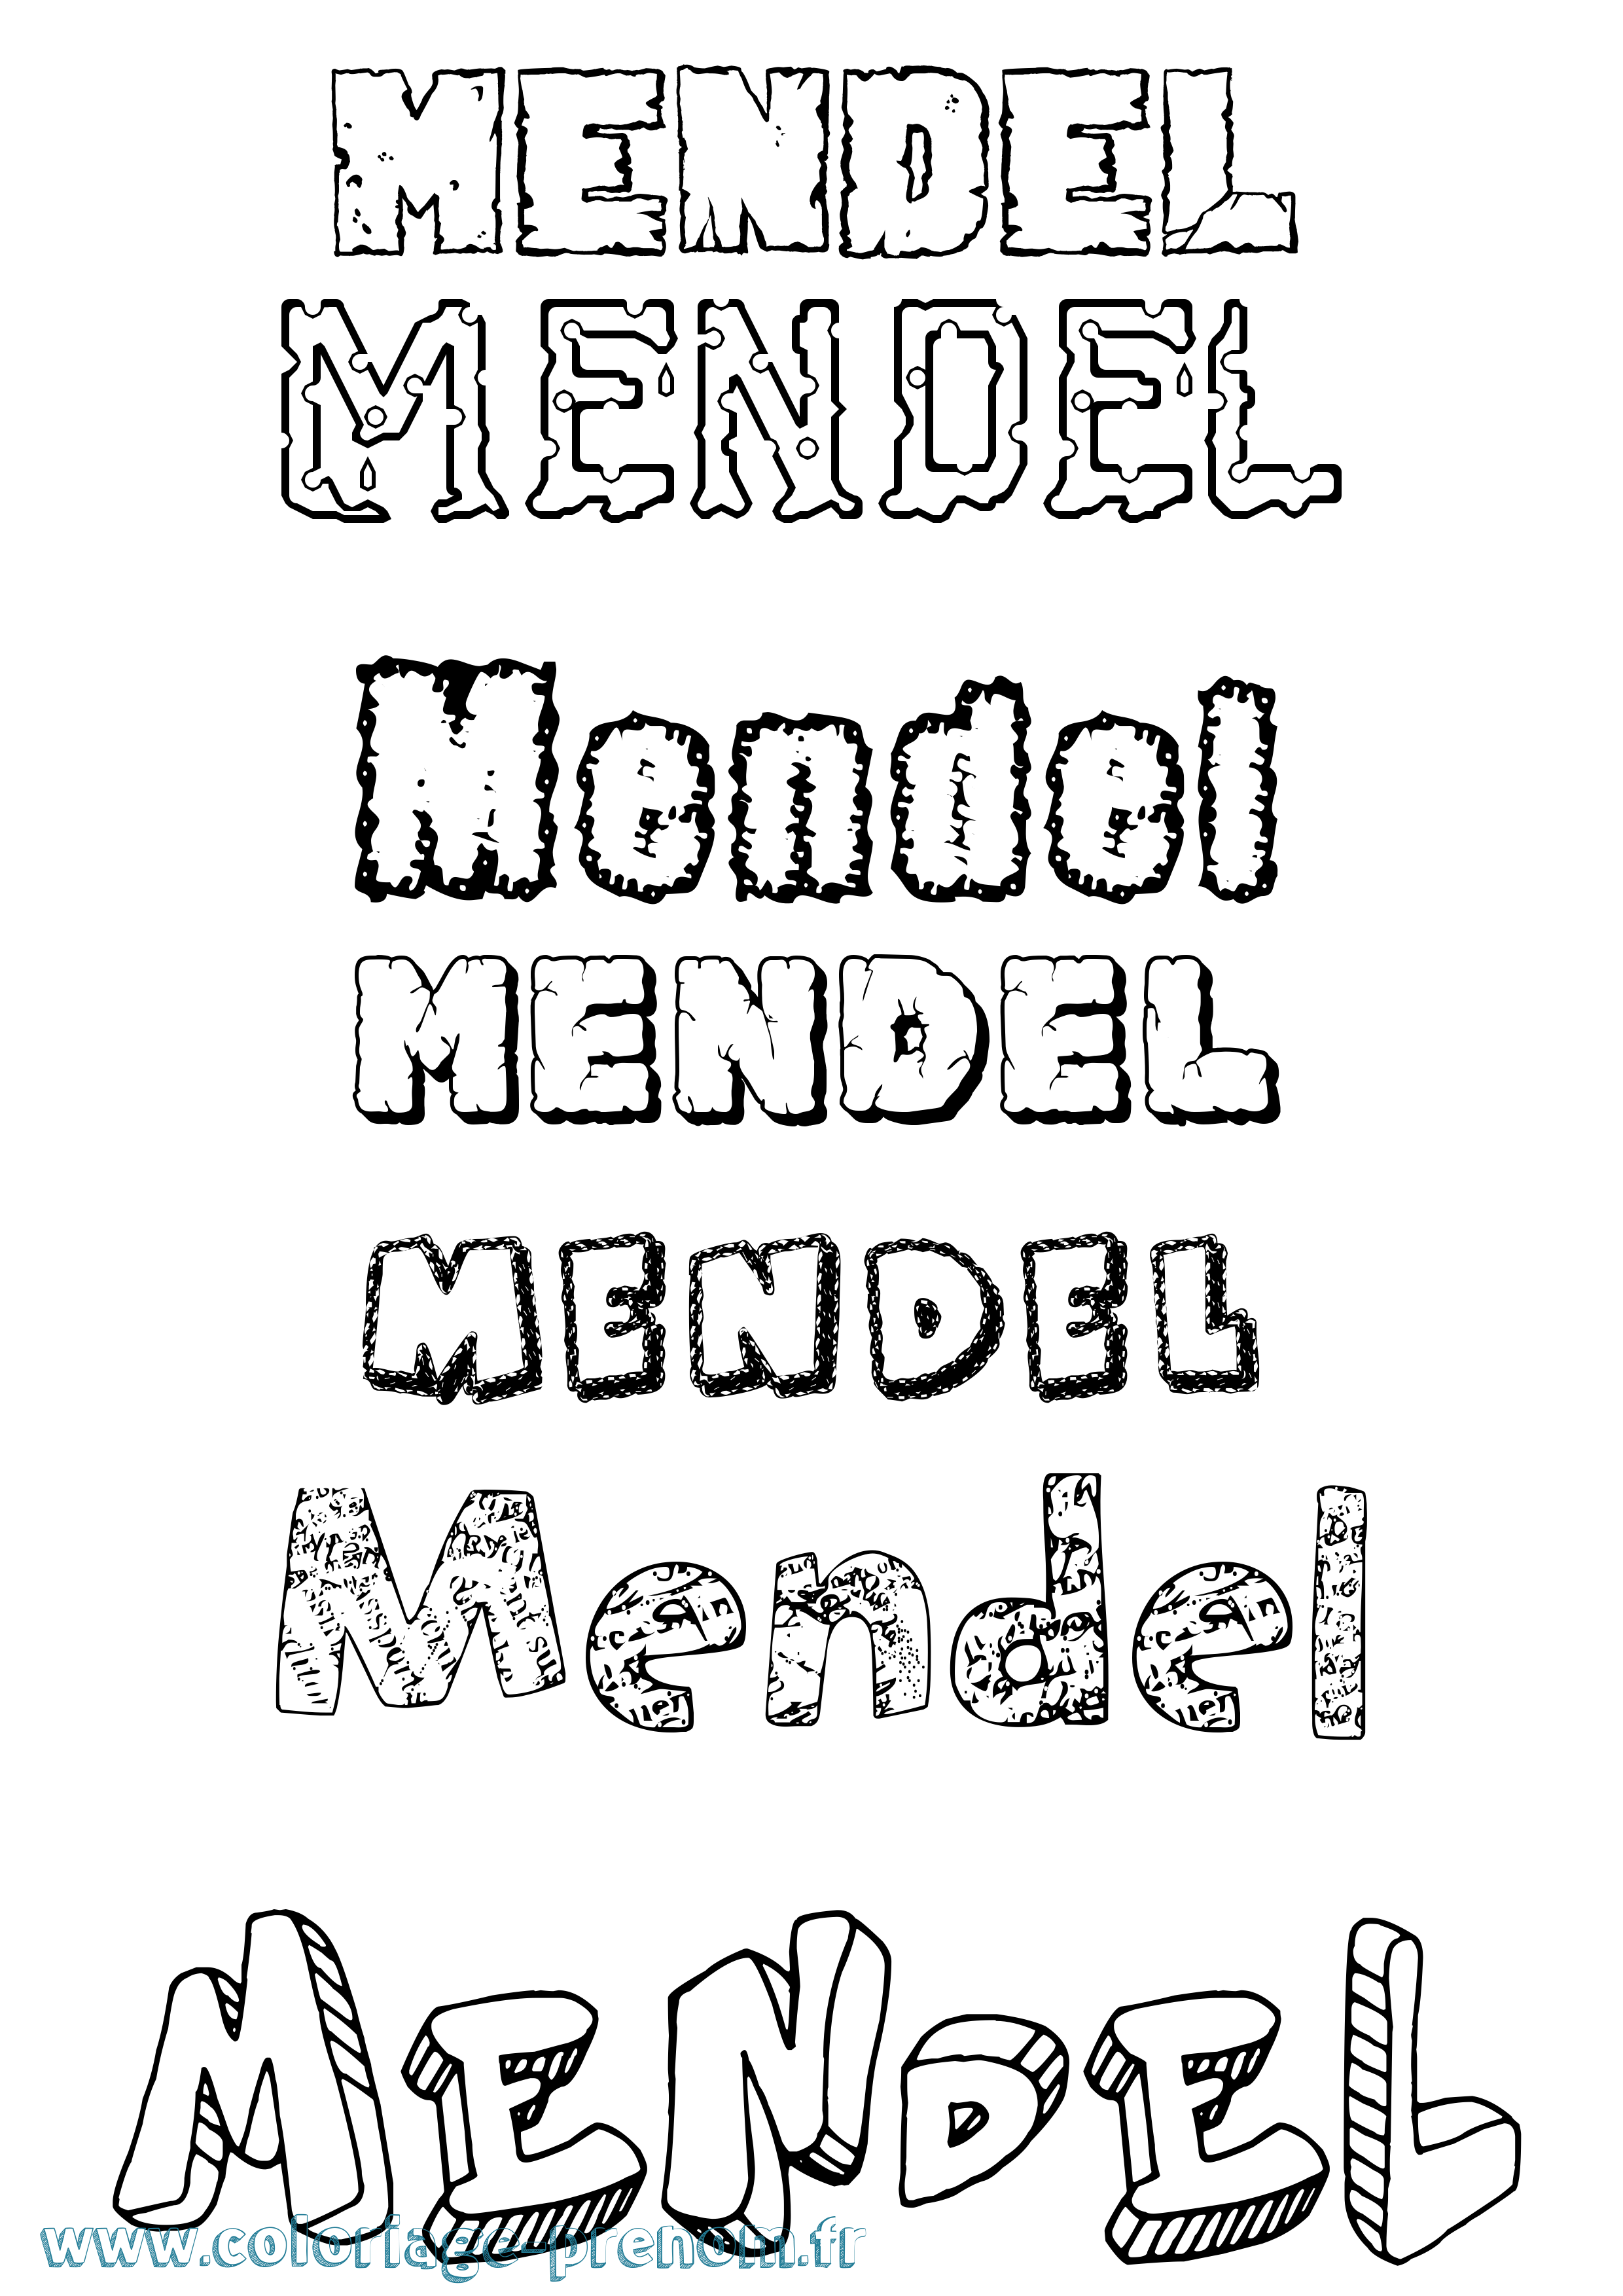 Coloriage prénom Mendel